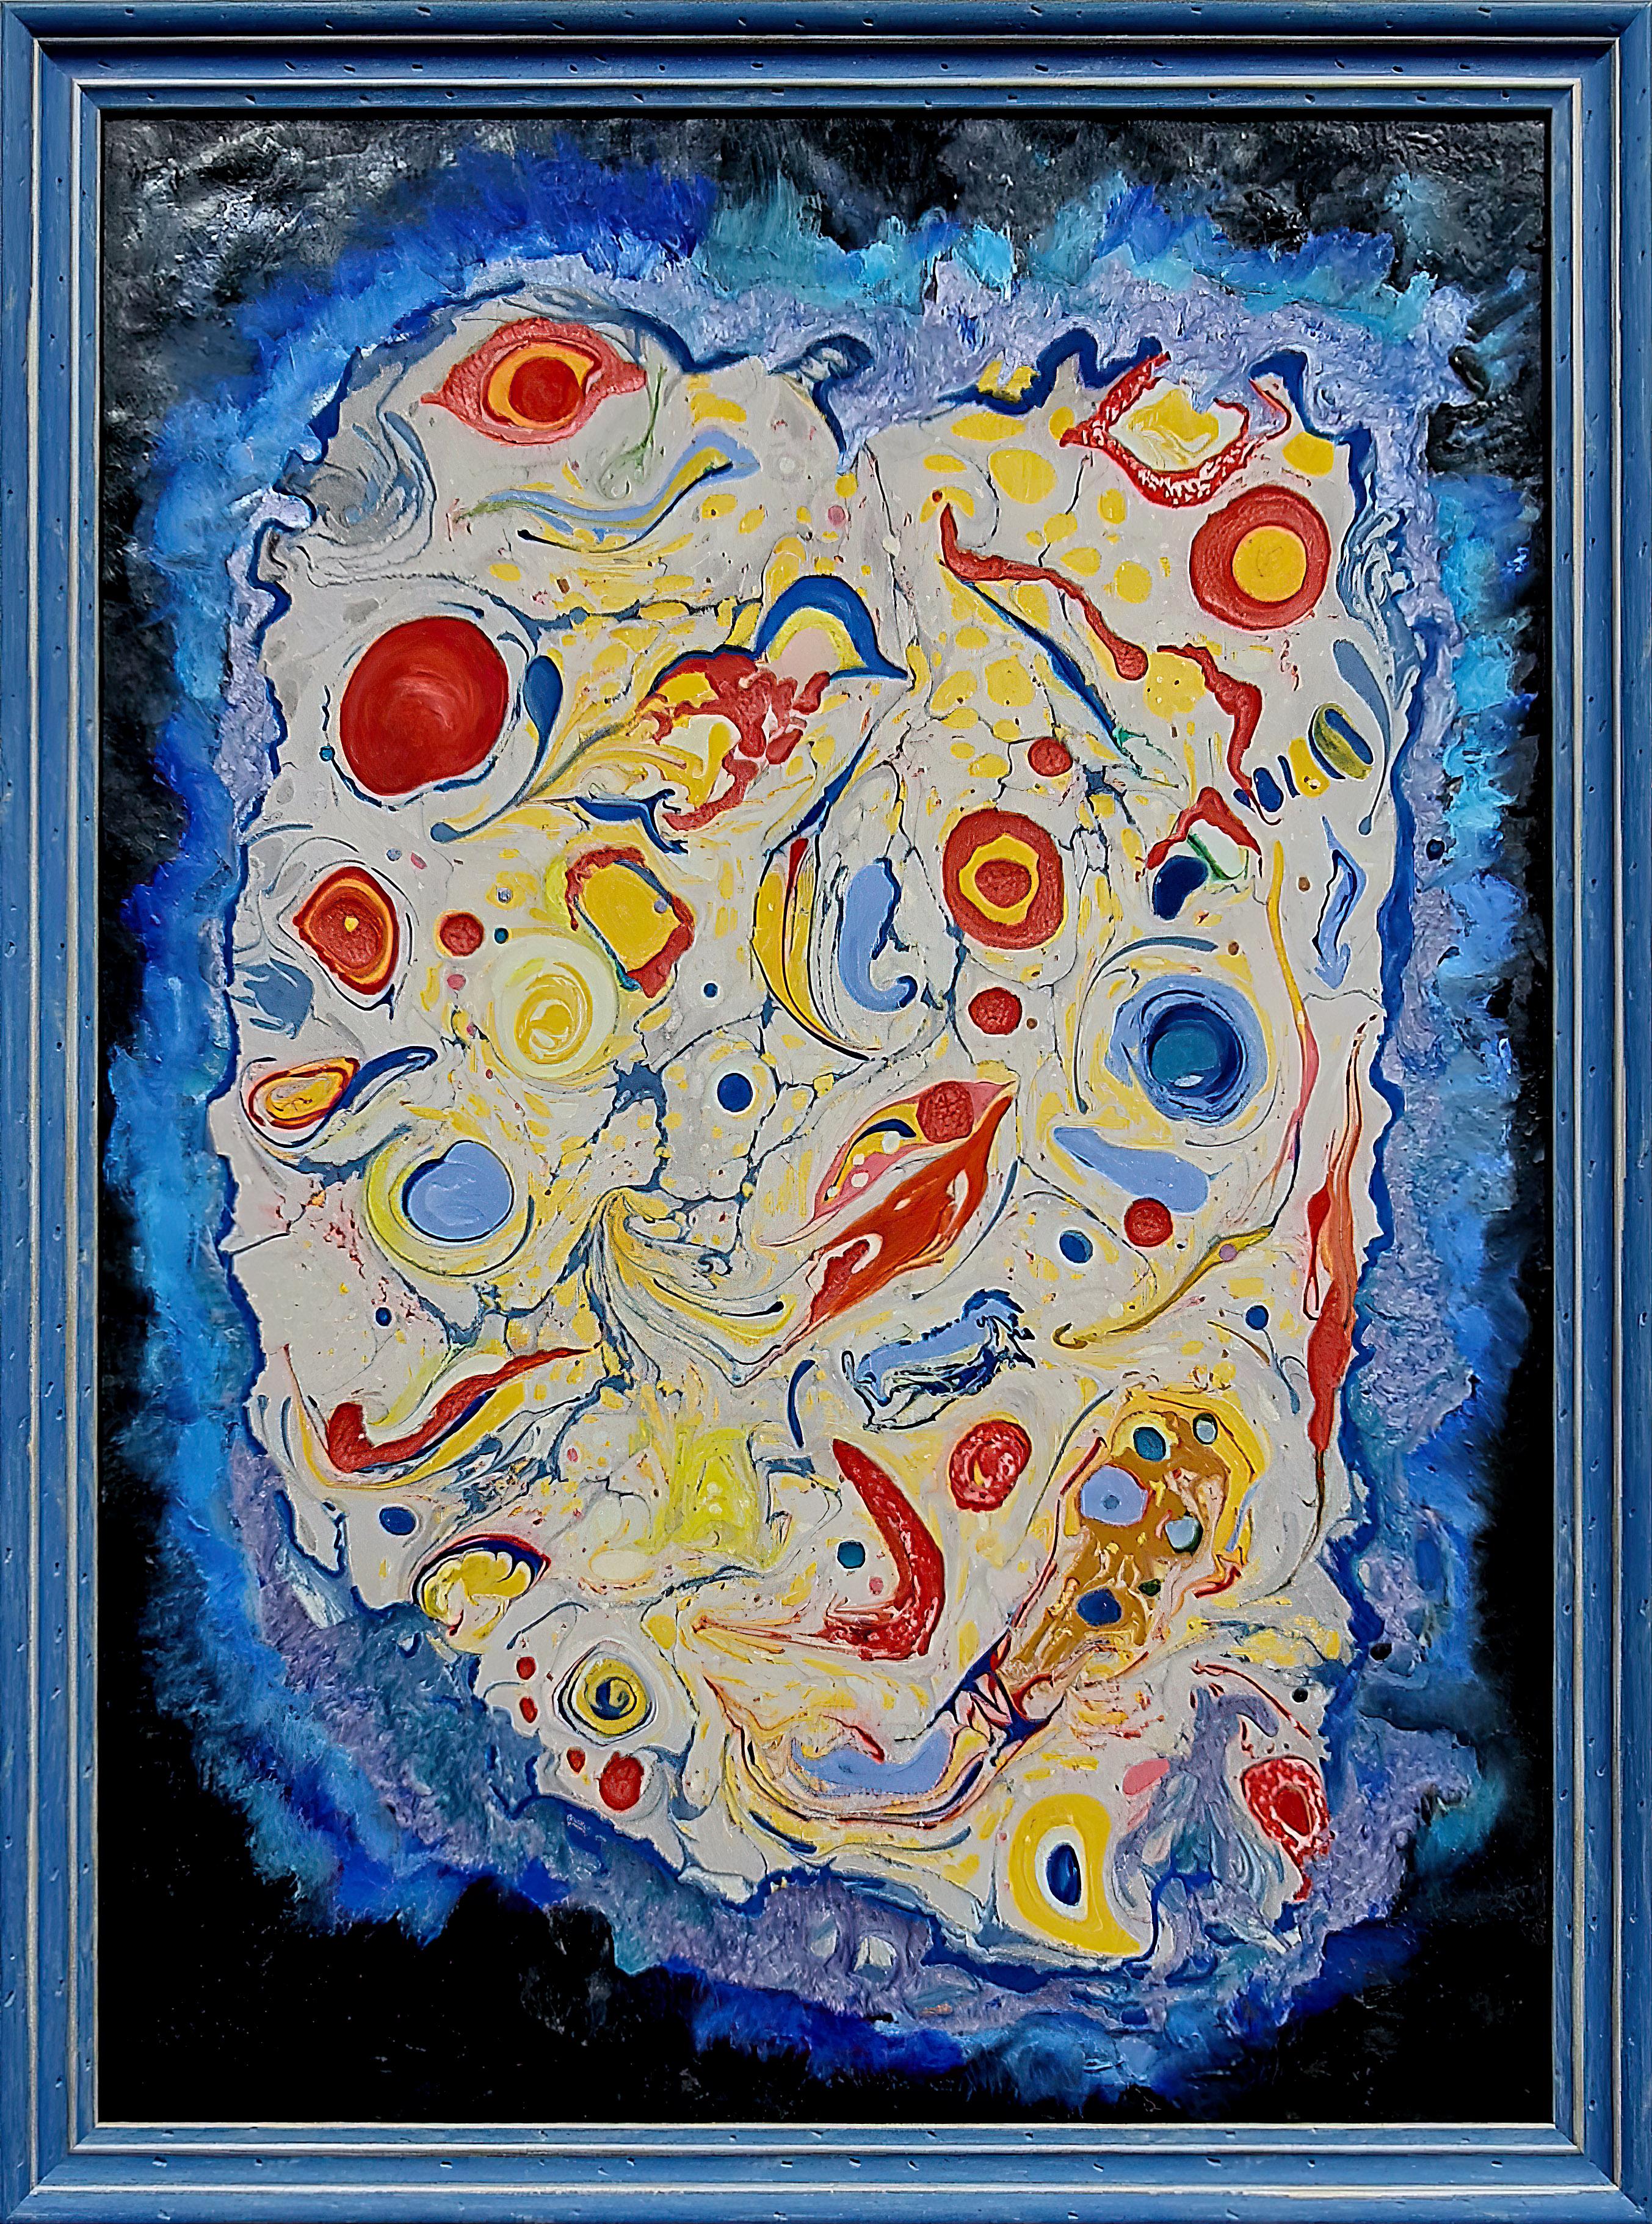 "L'extase cosmique. Abstraction dans le style de Kandinsky par Lilya Volskaya 